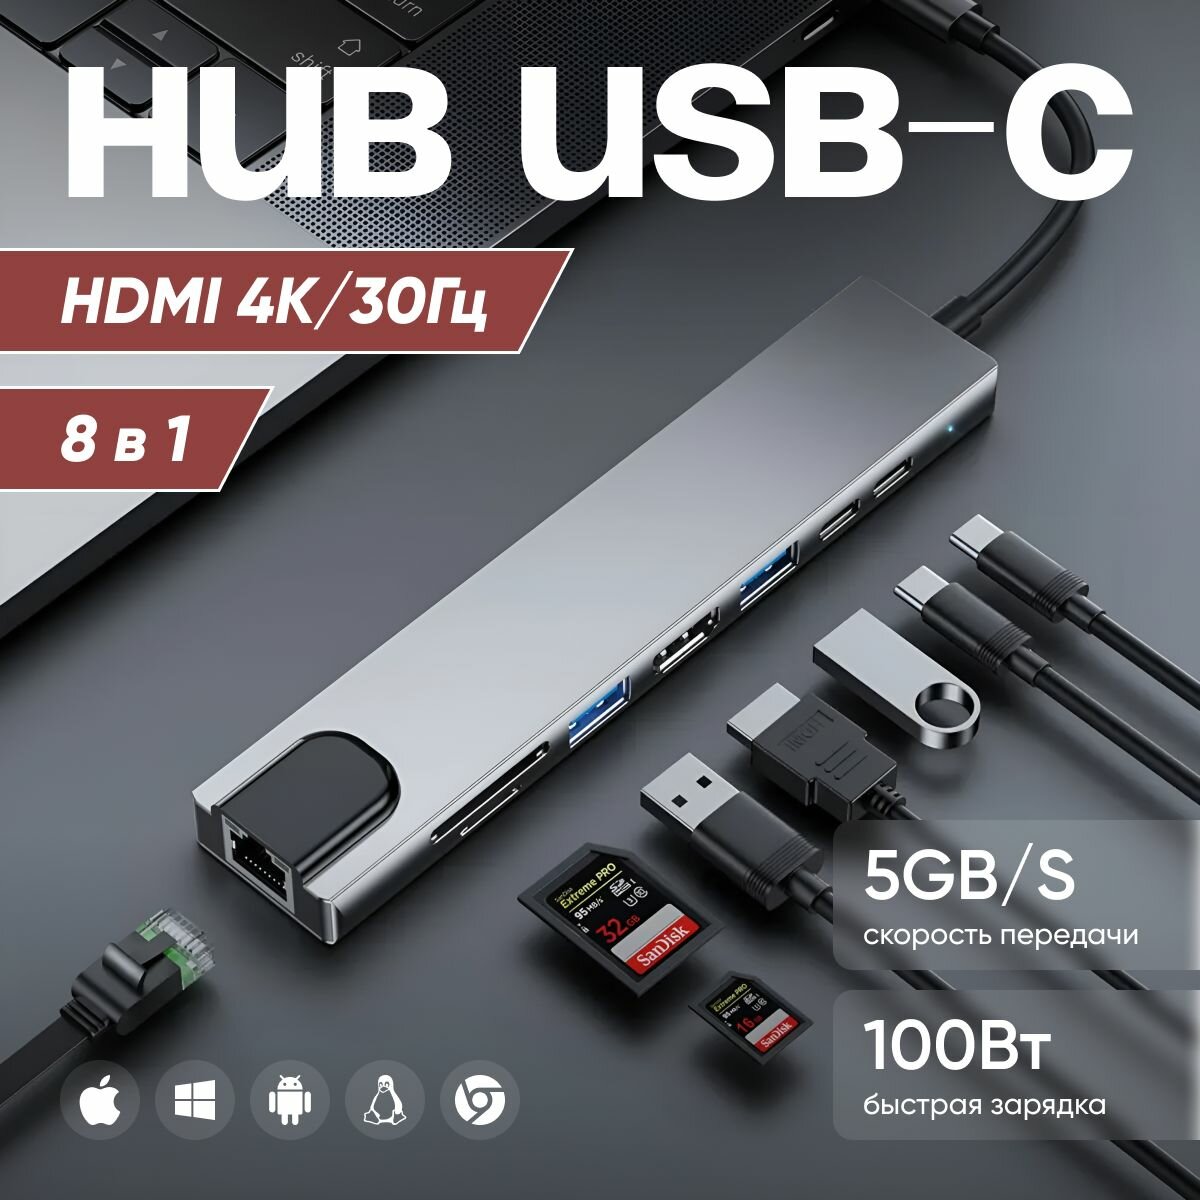 8 in 1 usb type c hub 3.0 Разветвитель с 4K HDMI, PD, кард-ридером, RJ45, для ipad, Macbook, xiaomi, ноутбука